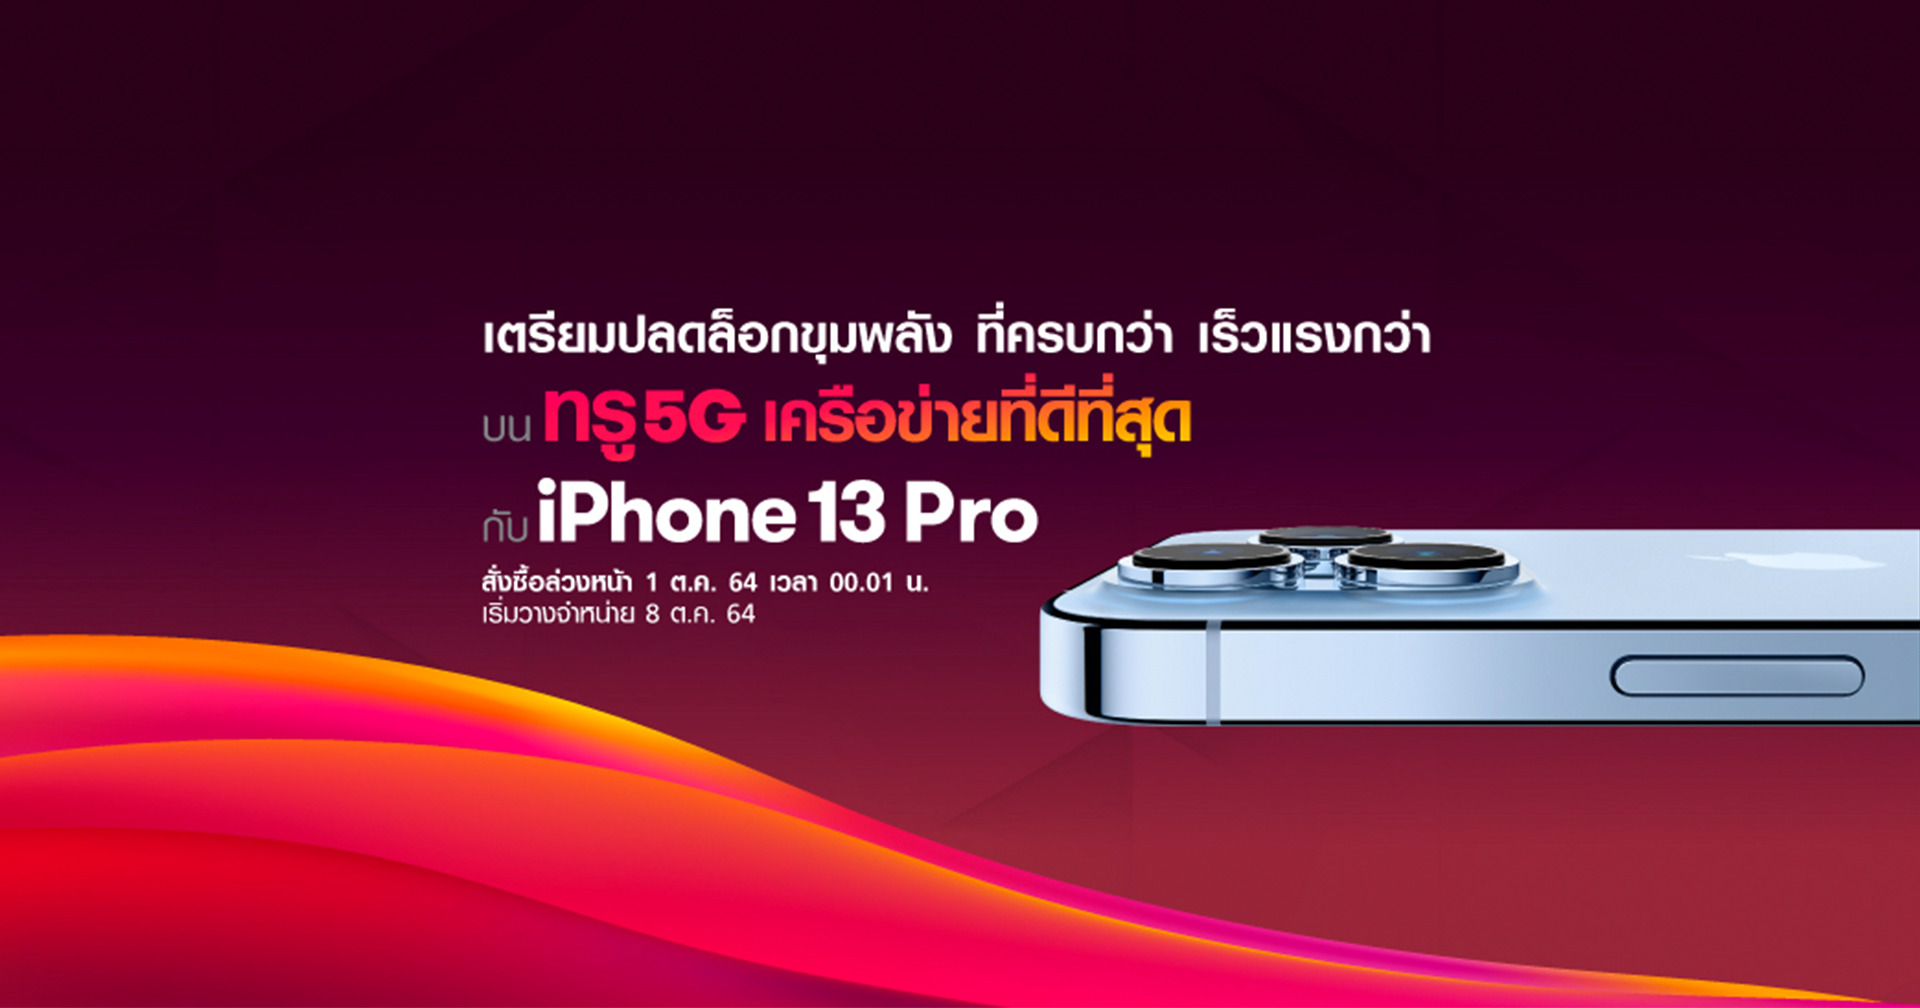 Truemove H เตรียมเปิดสั่งจอง iPhone 13 Pro ล่วงหน้า วันที่ 1 ต.ค. นี้